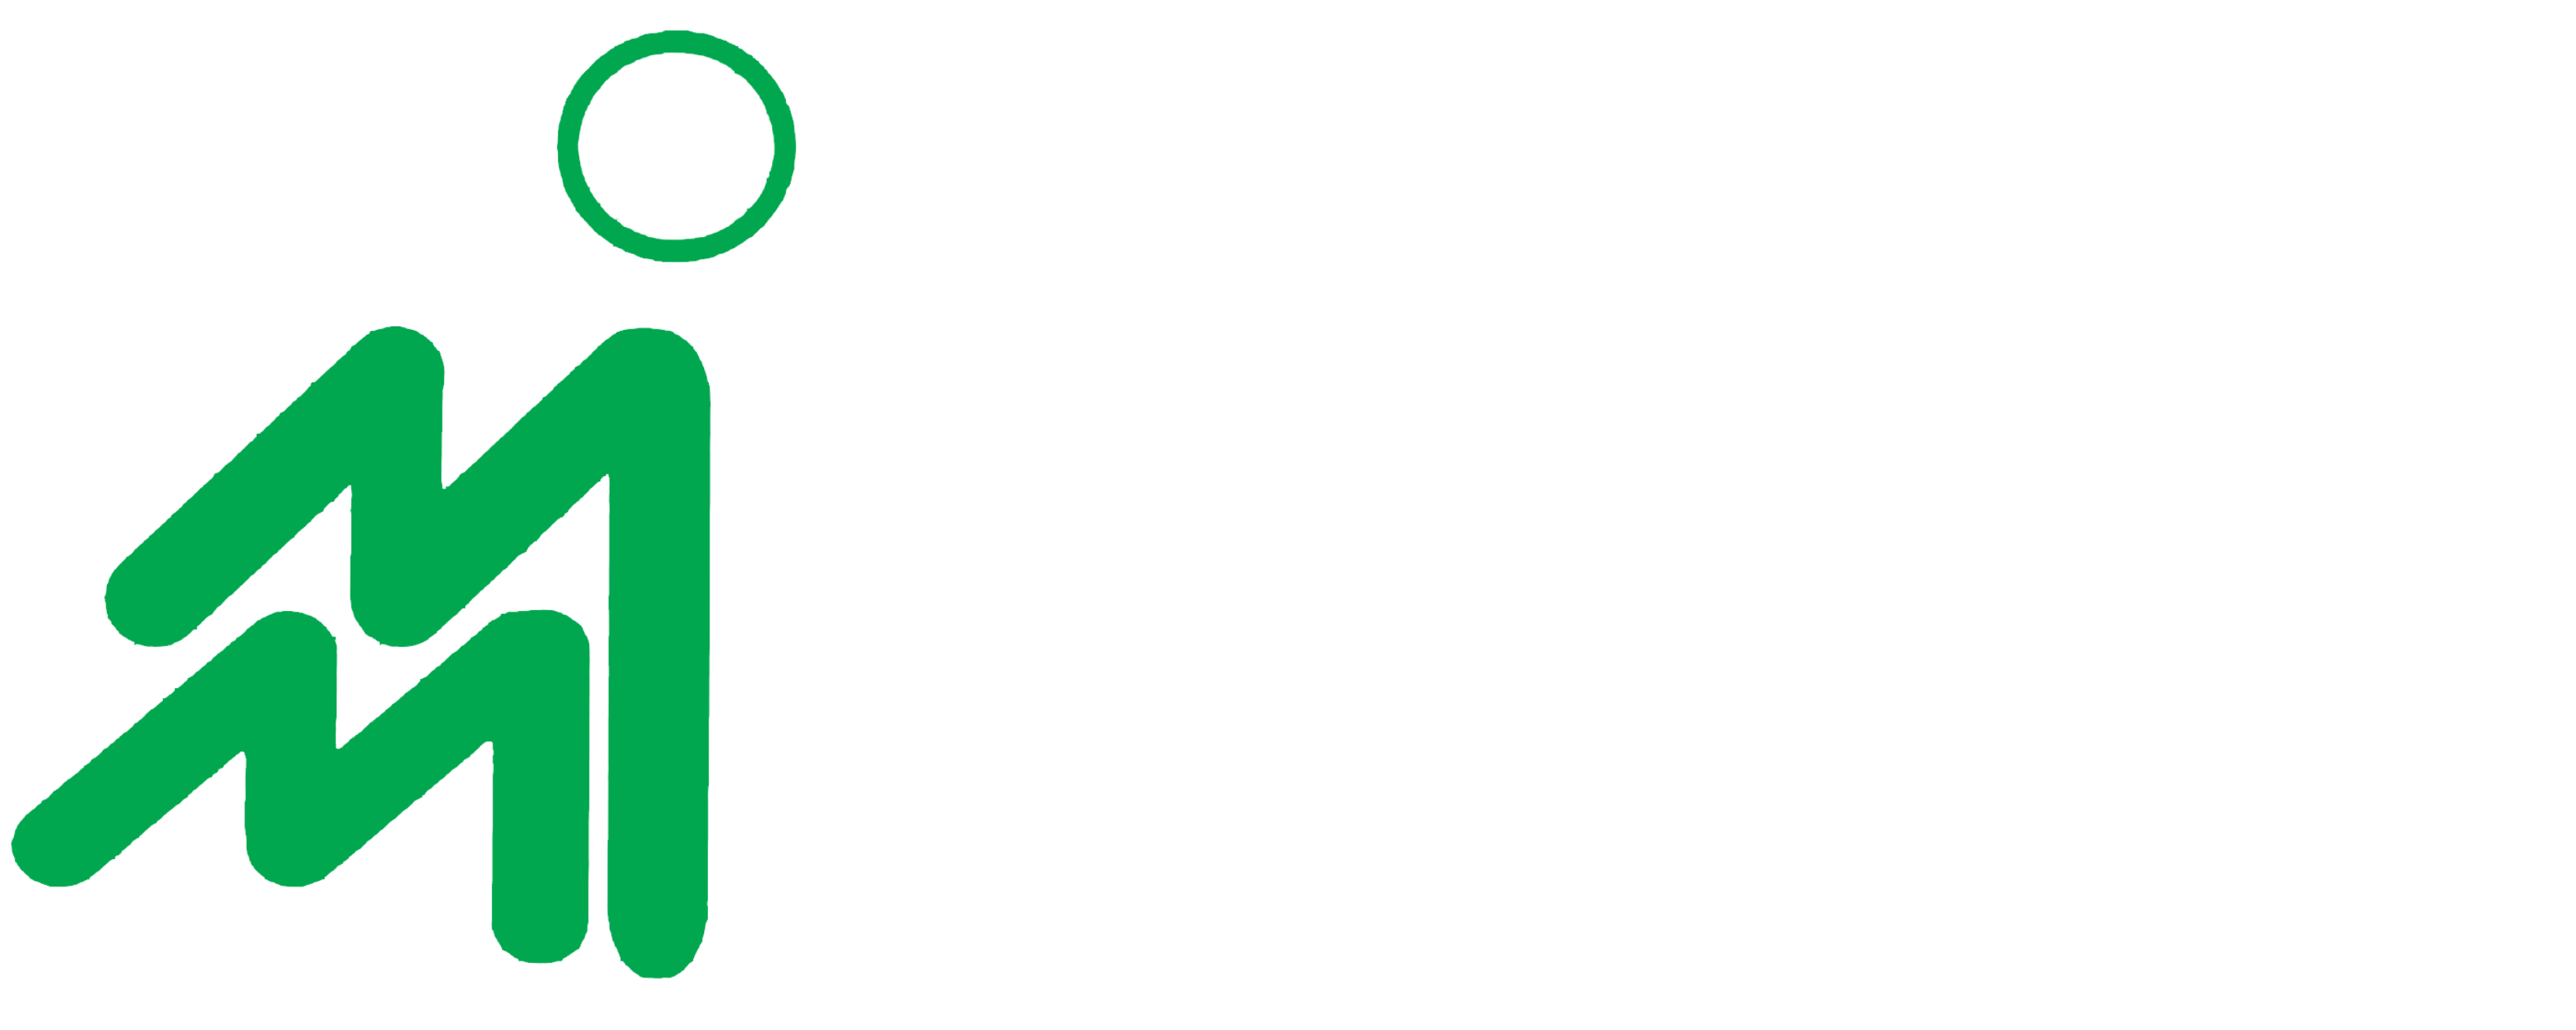 Metro Island Mortgage Inc Logo